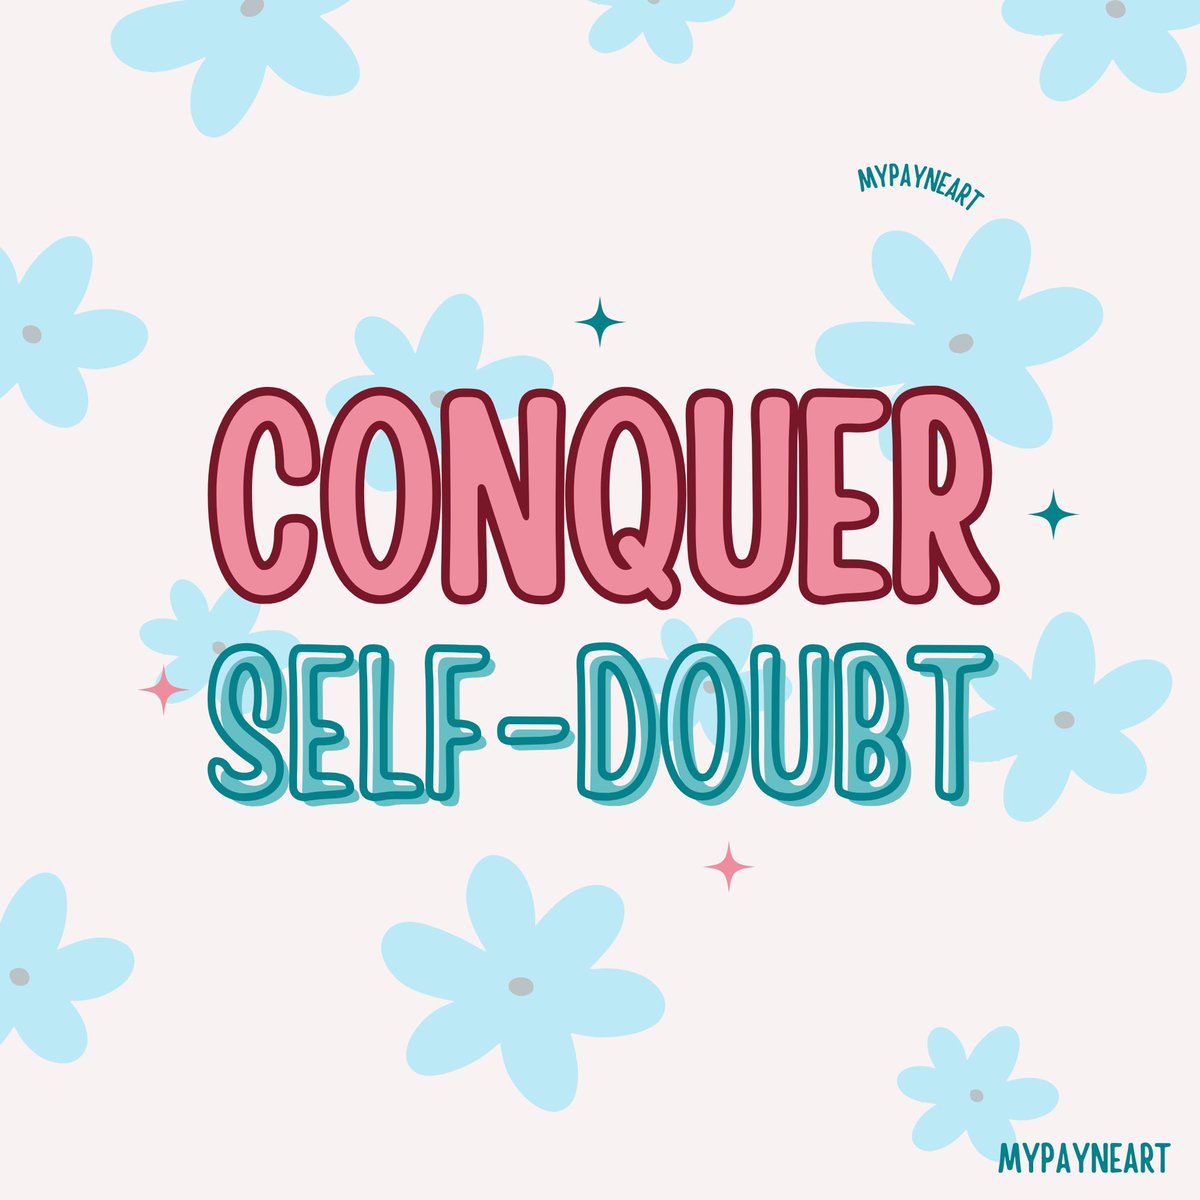 Conquer self-doubt ✨
.
.
.
#selfdoubt #conquer #conquerselfdoubt #graphicdesigner #graphicdesignlife #artoftheday #canvaart #art #artist #girlartist #typography #type #typographyinspo #graphicdesignercommunity #graphicdesigncommunity #graphicdesign #digital #digitalart